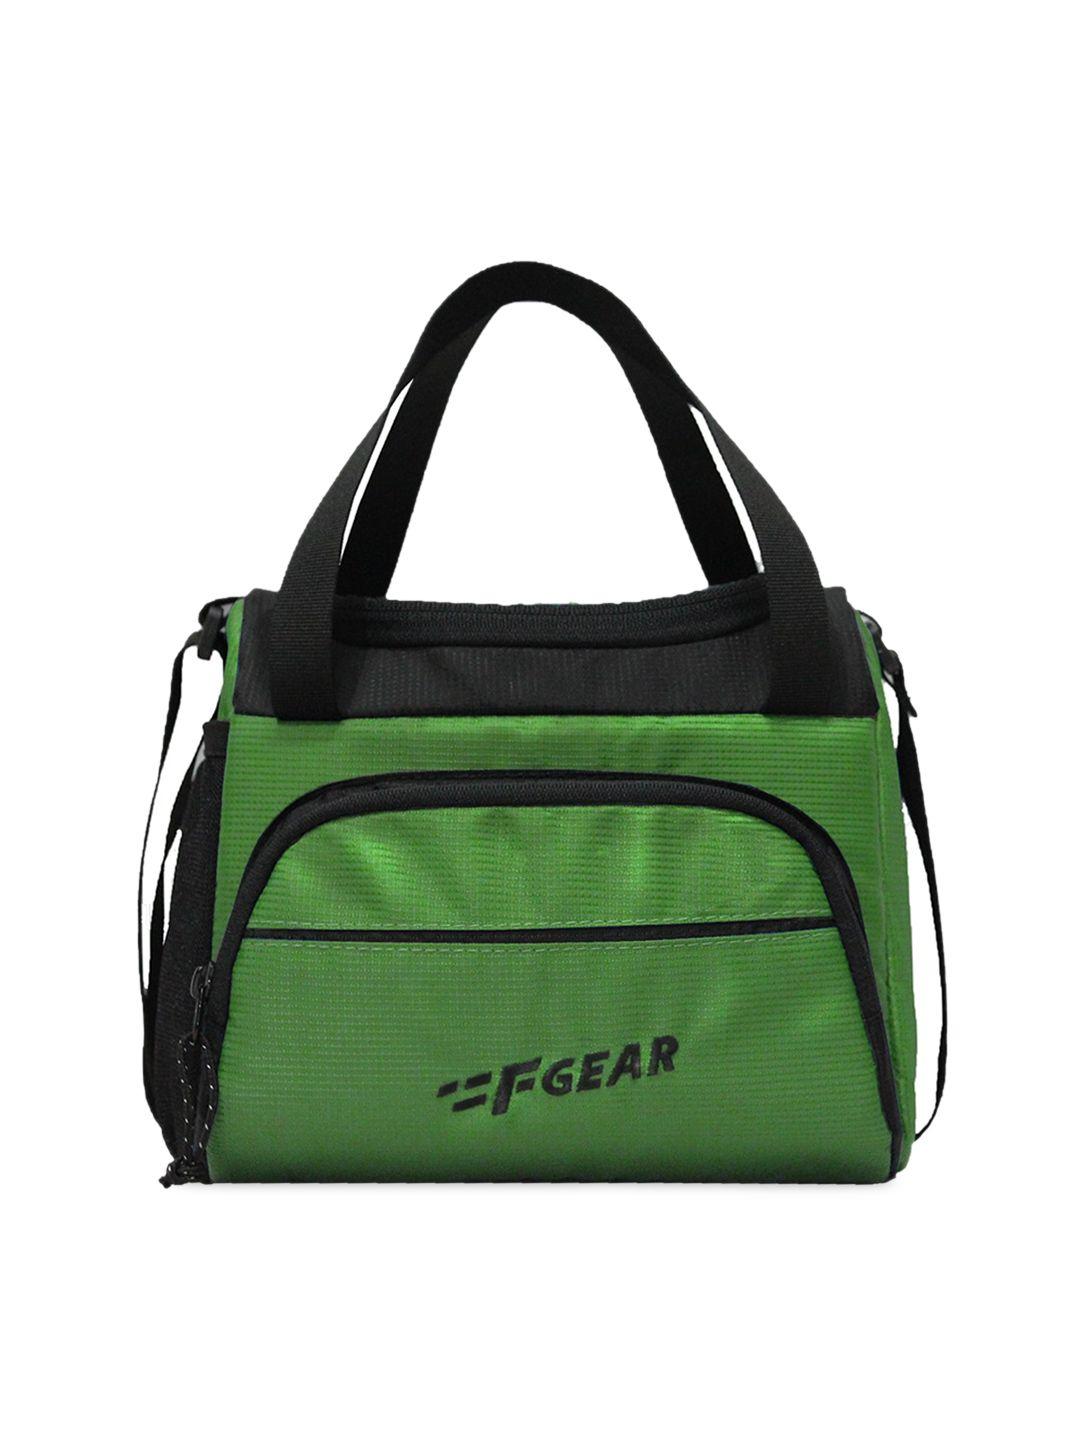 f gear green solid handheld bag